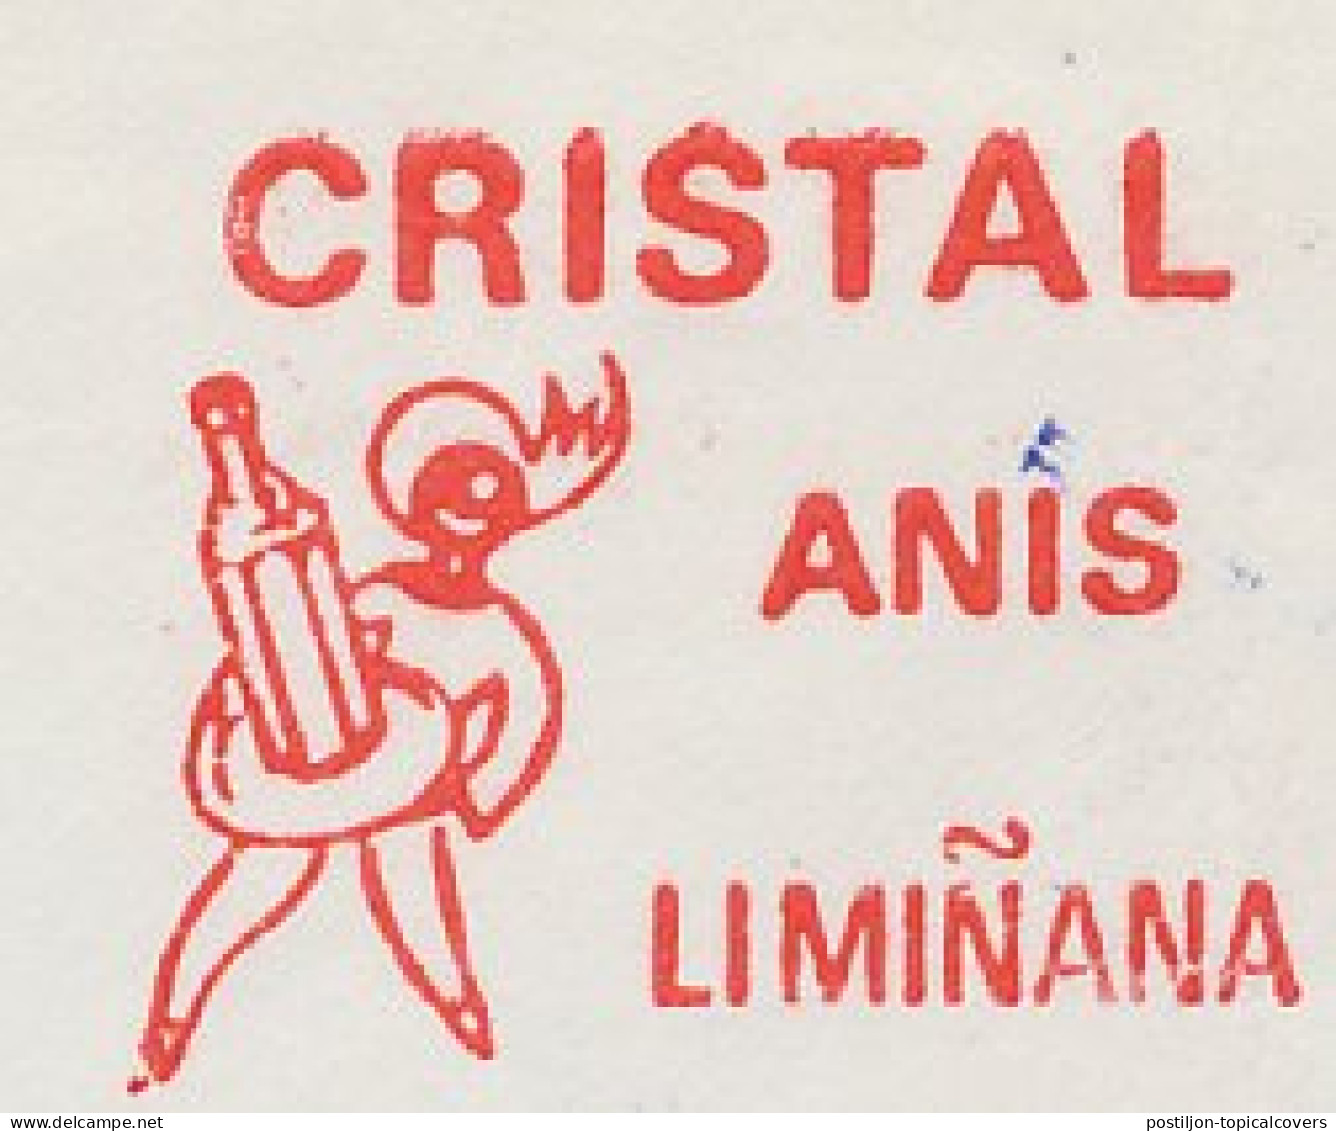 Meter Cut France 1964 Aperitif - Liqueur - Cristal Anis - Vinos Y Alcoholes